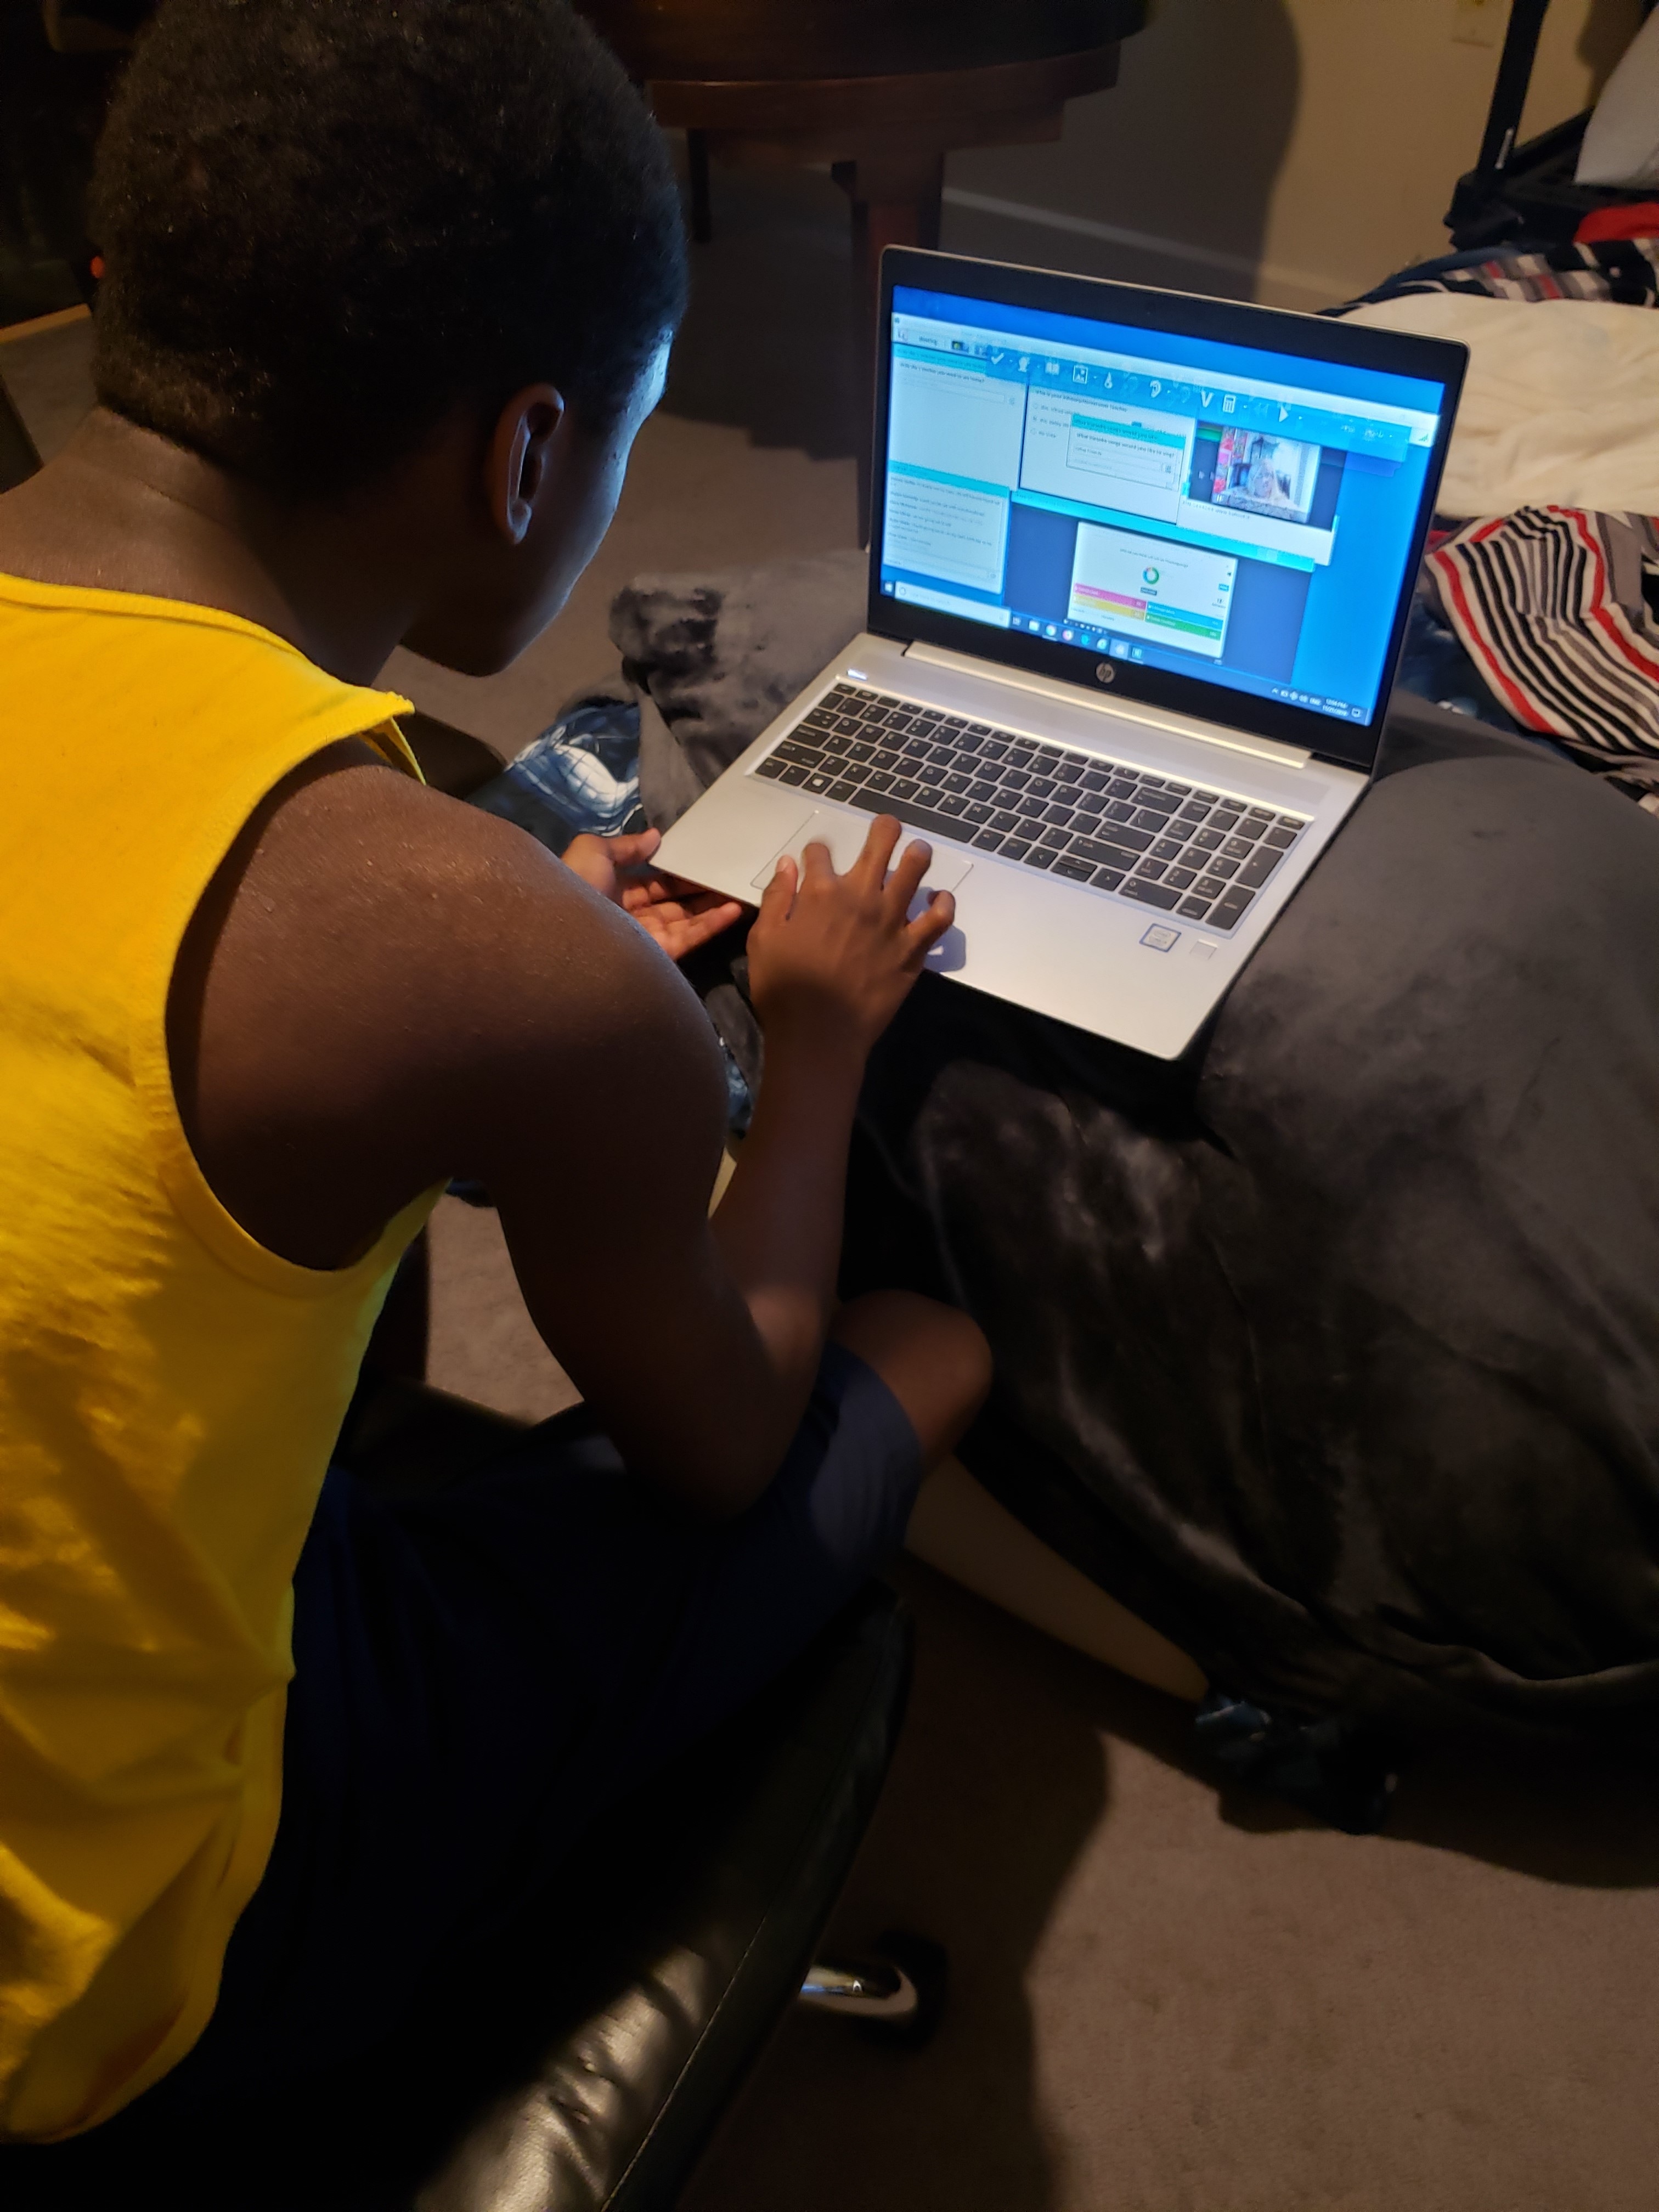 Michael attending online school on his laptop